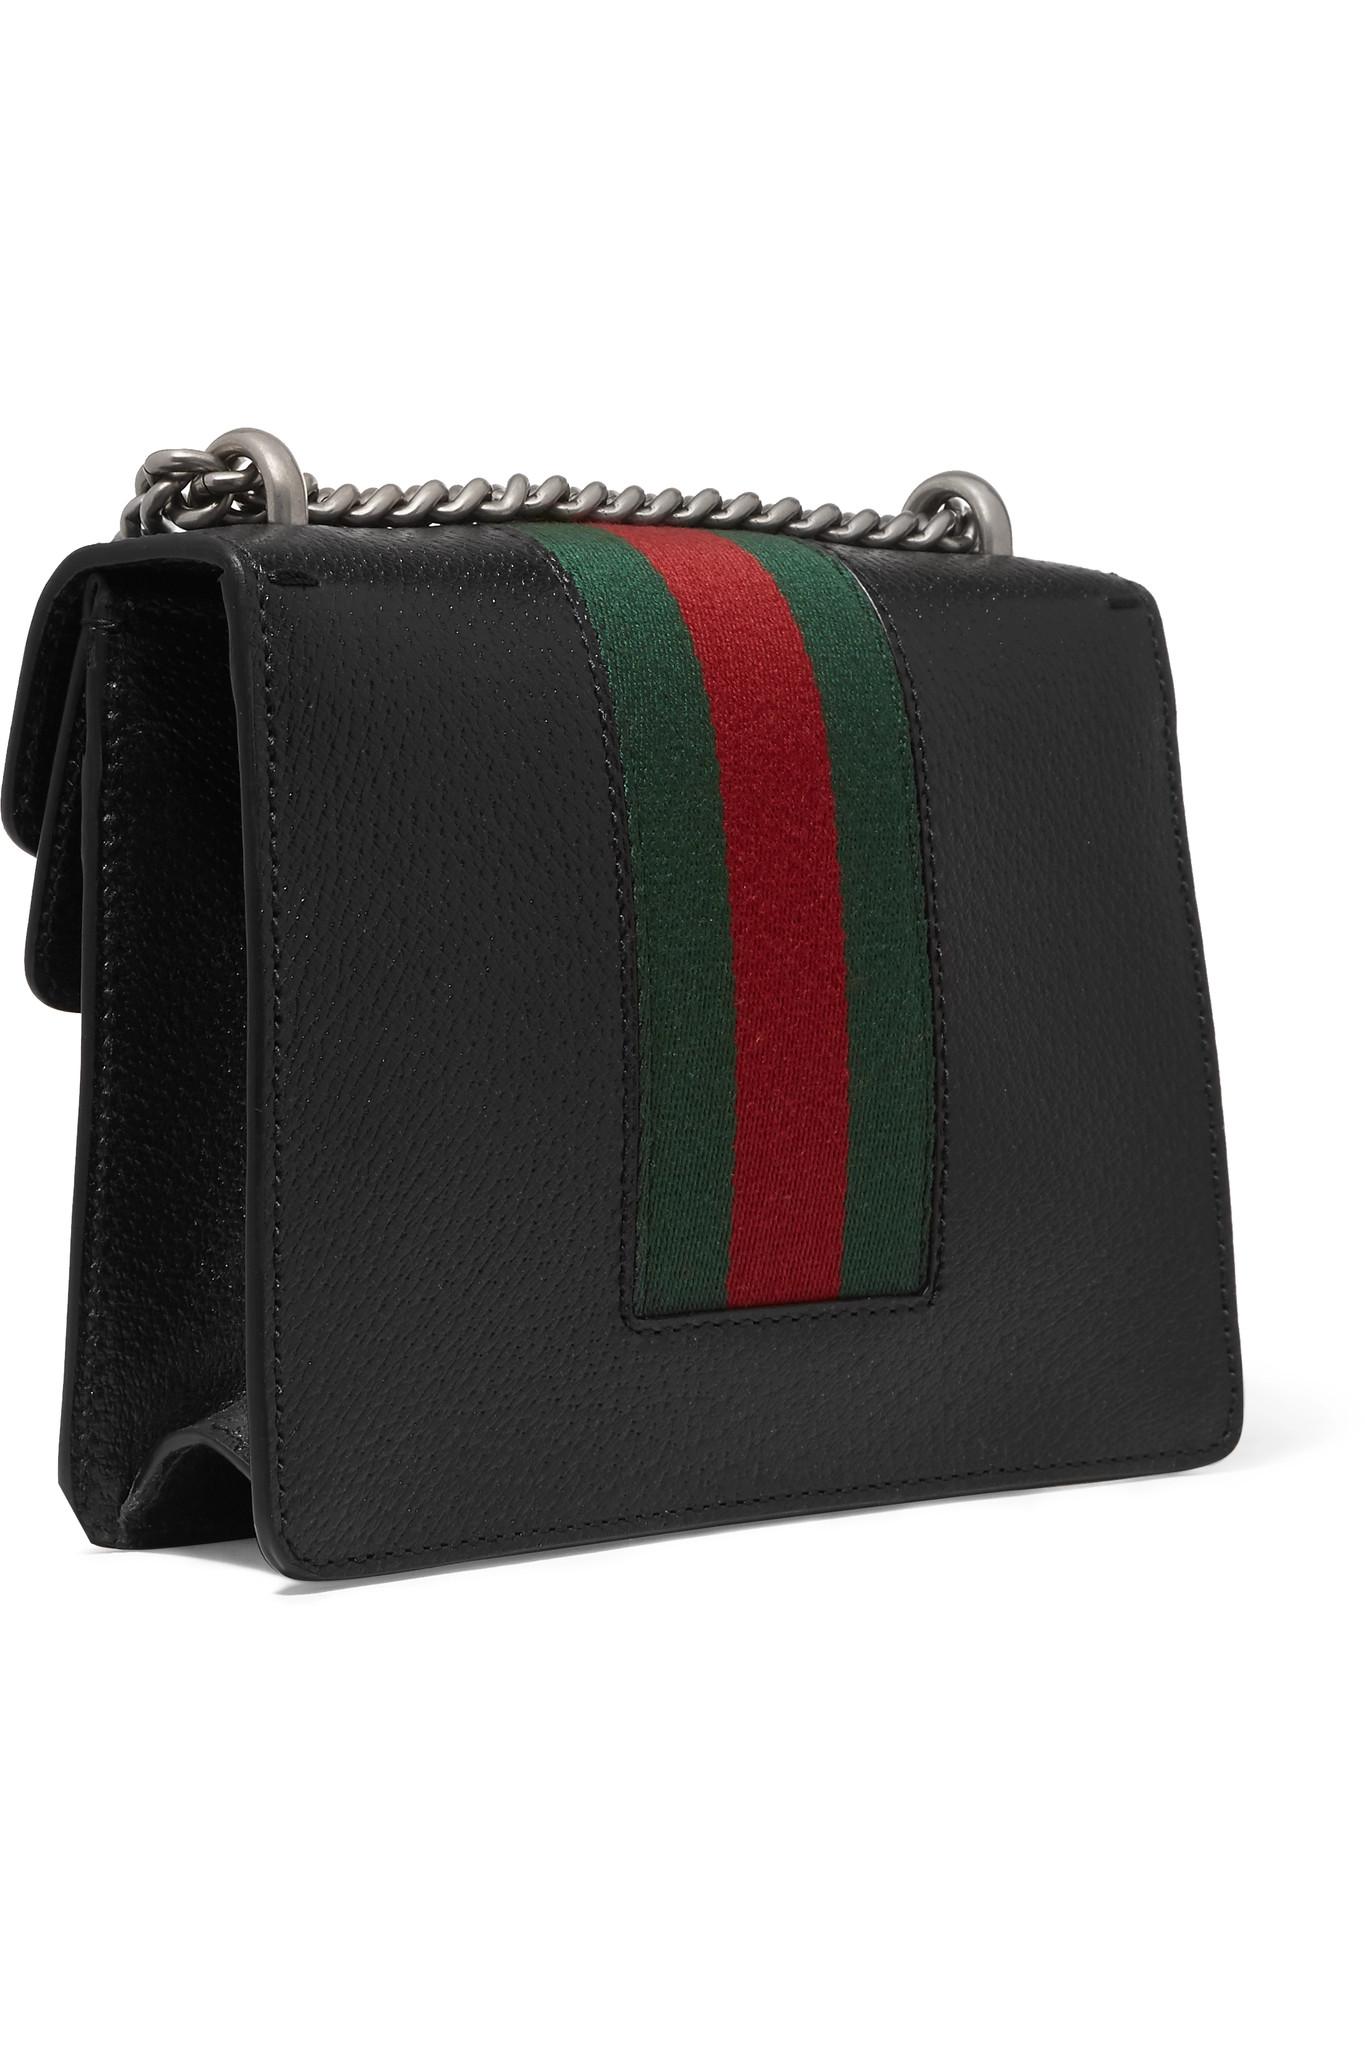 Gucci Dionysus Mini Textured-leather Shoulder Bag in Black - Lyst